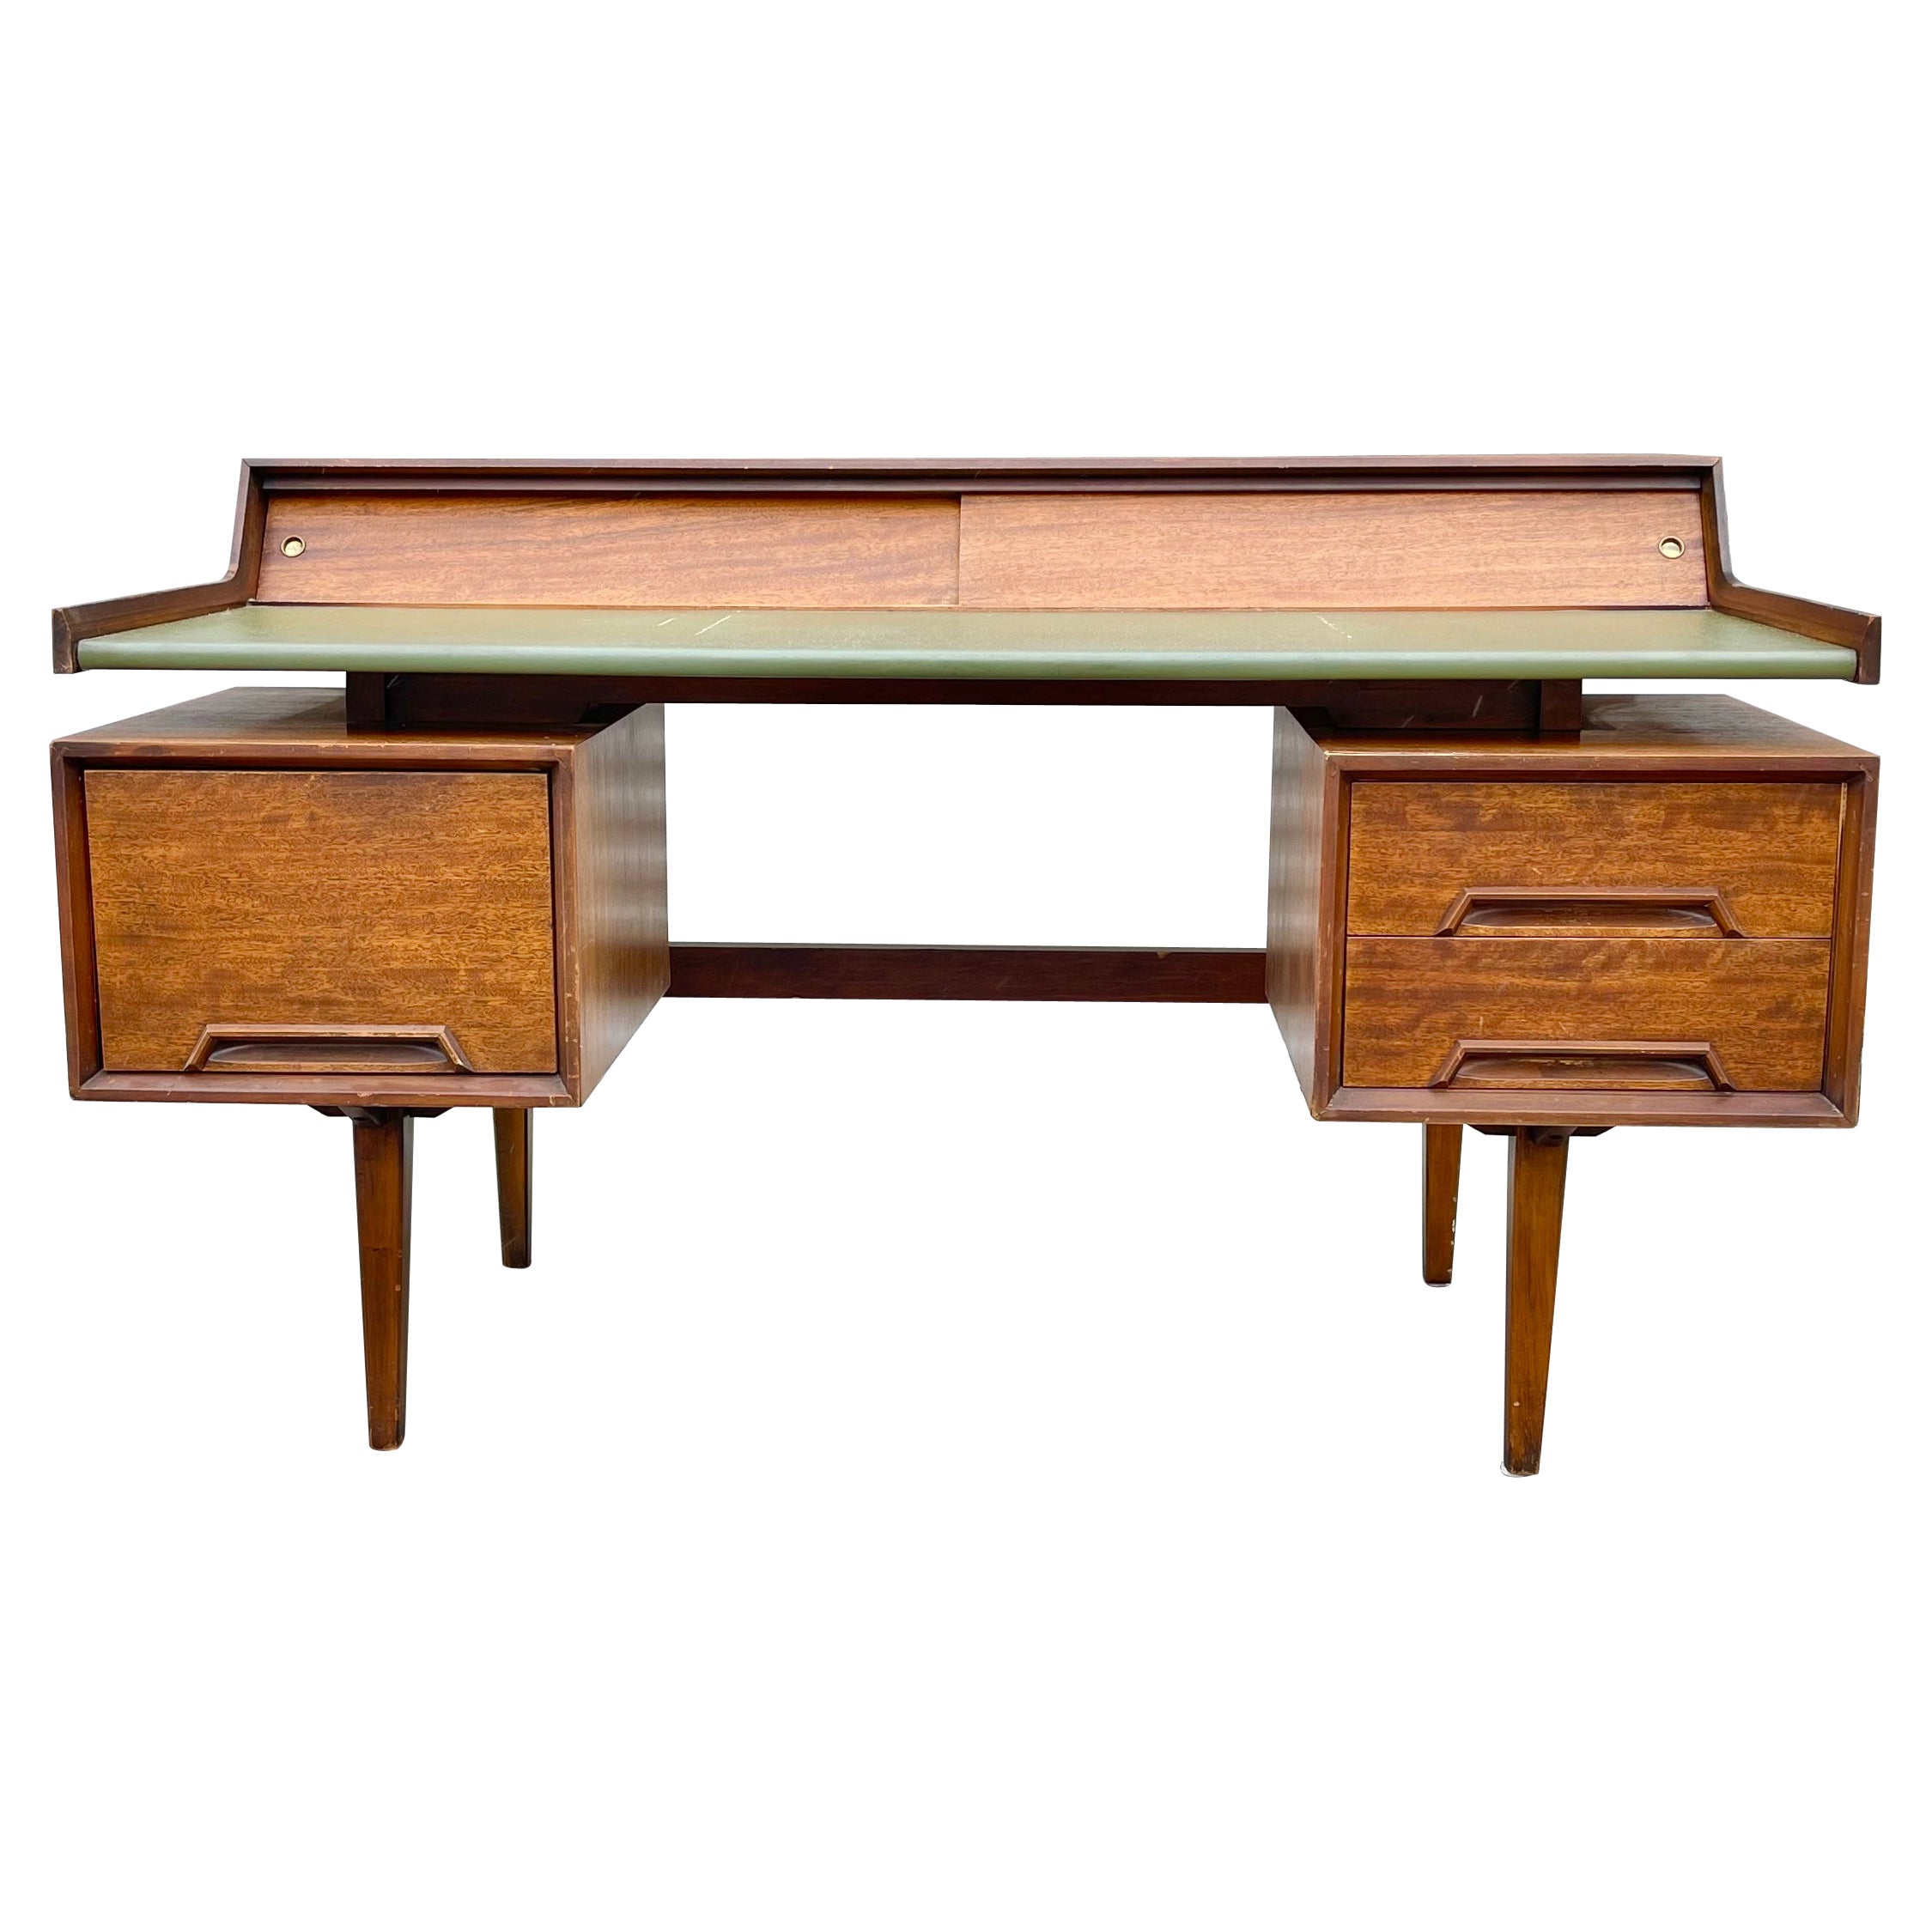 1950s Drexel "Perspective" Floating Top Desk Style After Milo Baughman